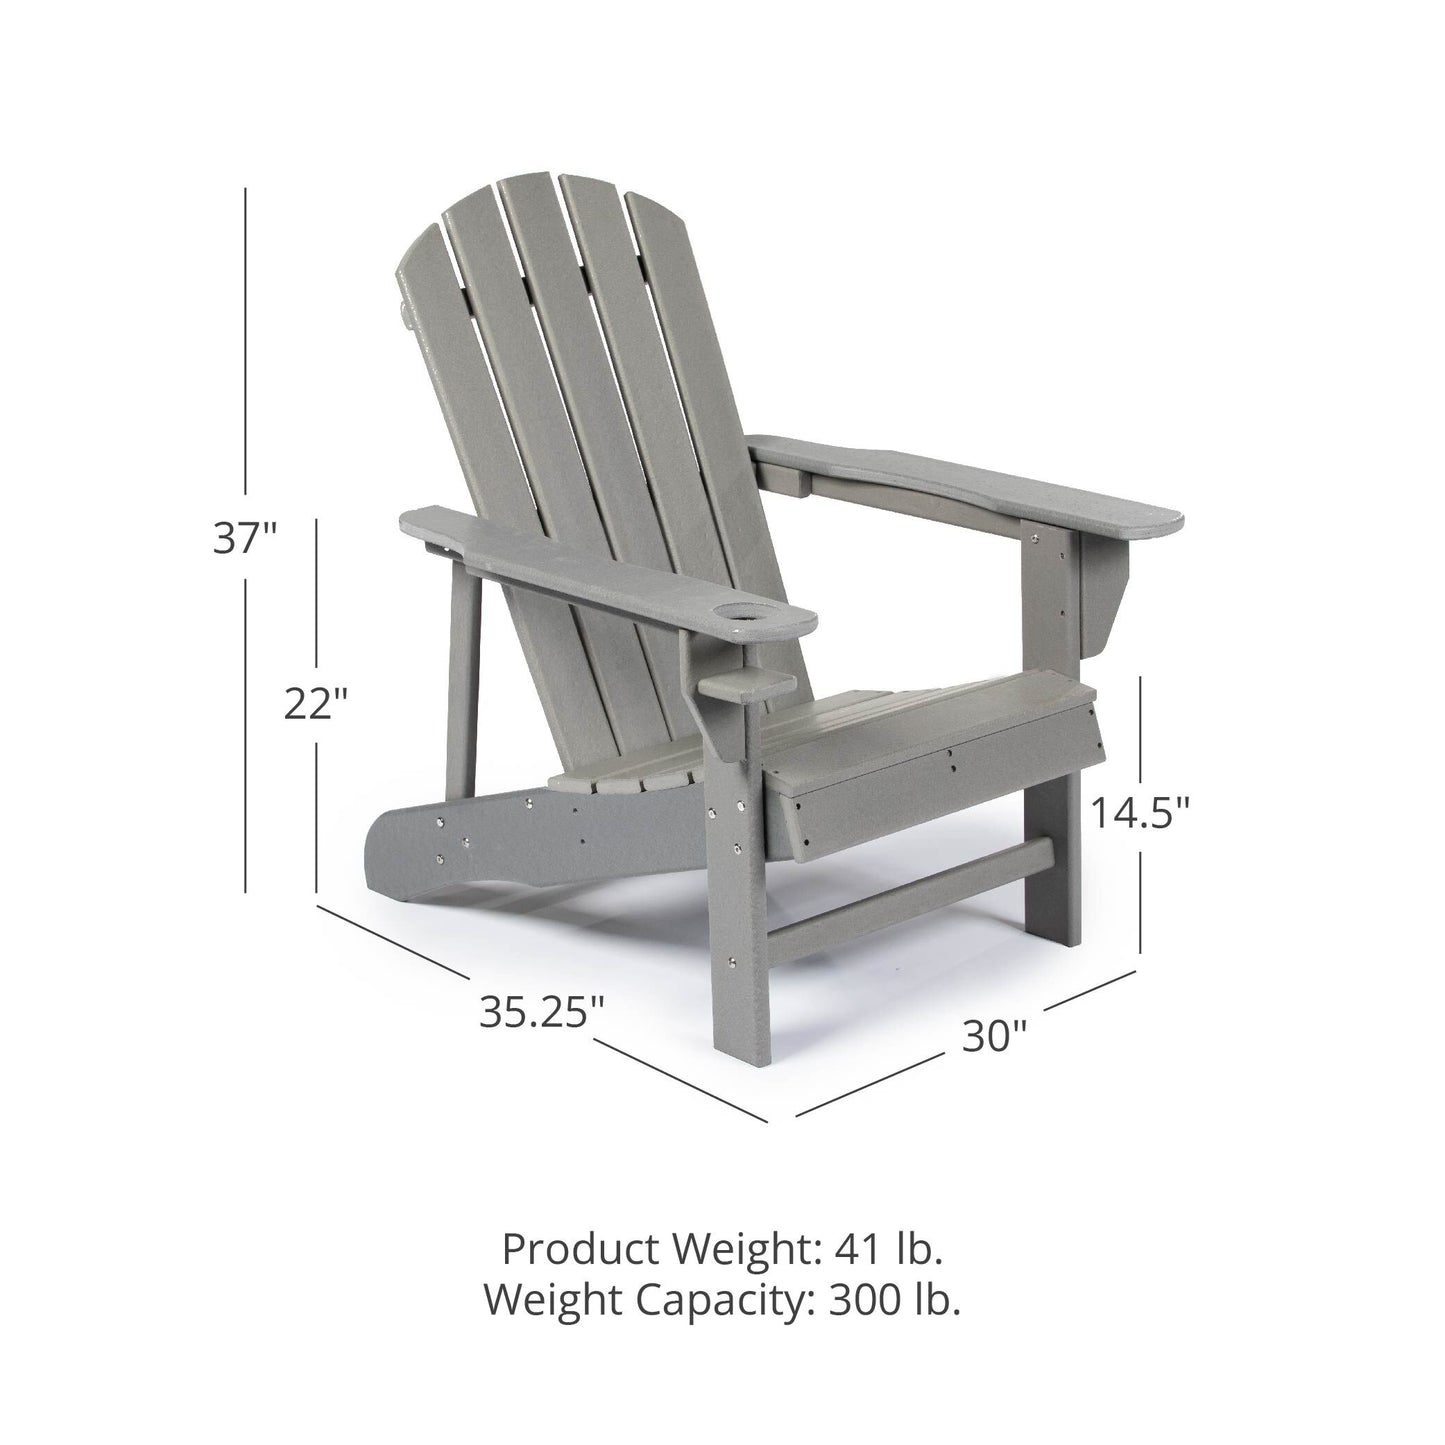 Everwood Hilltop Adirondack Chair - Adirondack Chair Color: Platinum Grey | Platinum Grey - view 17